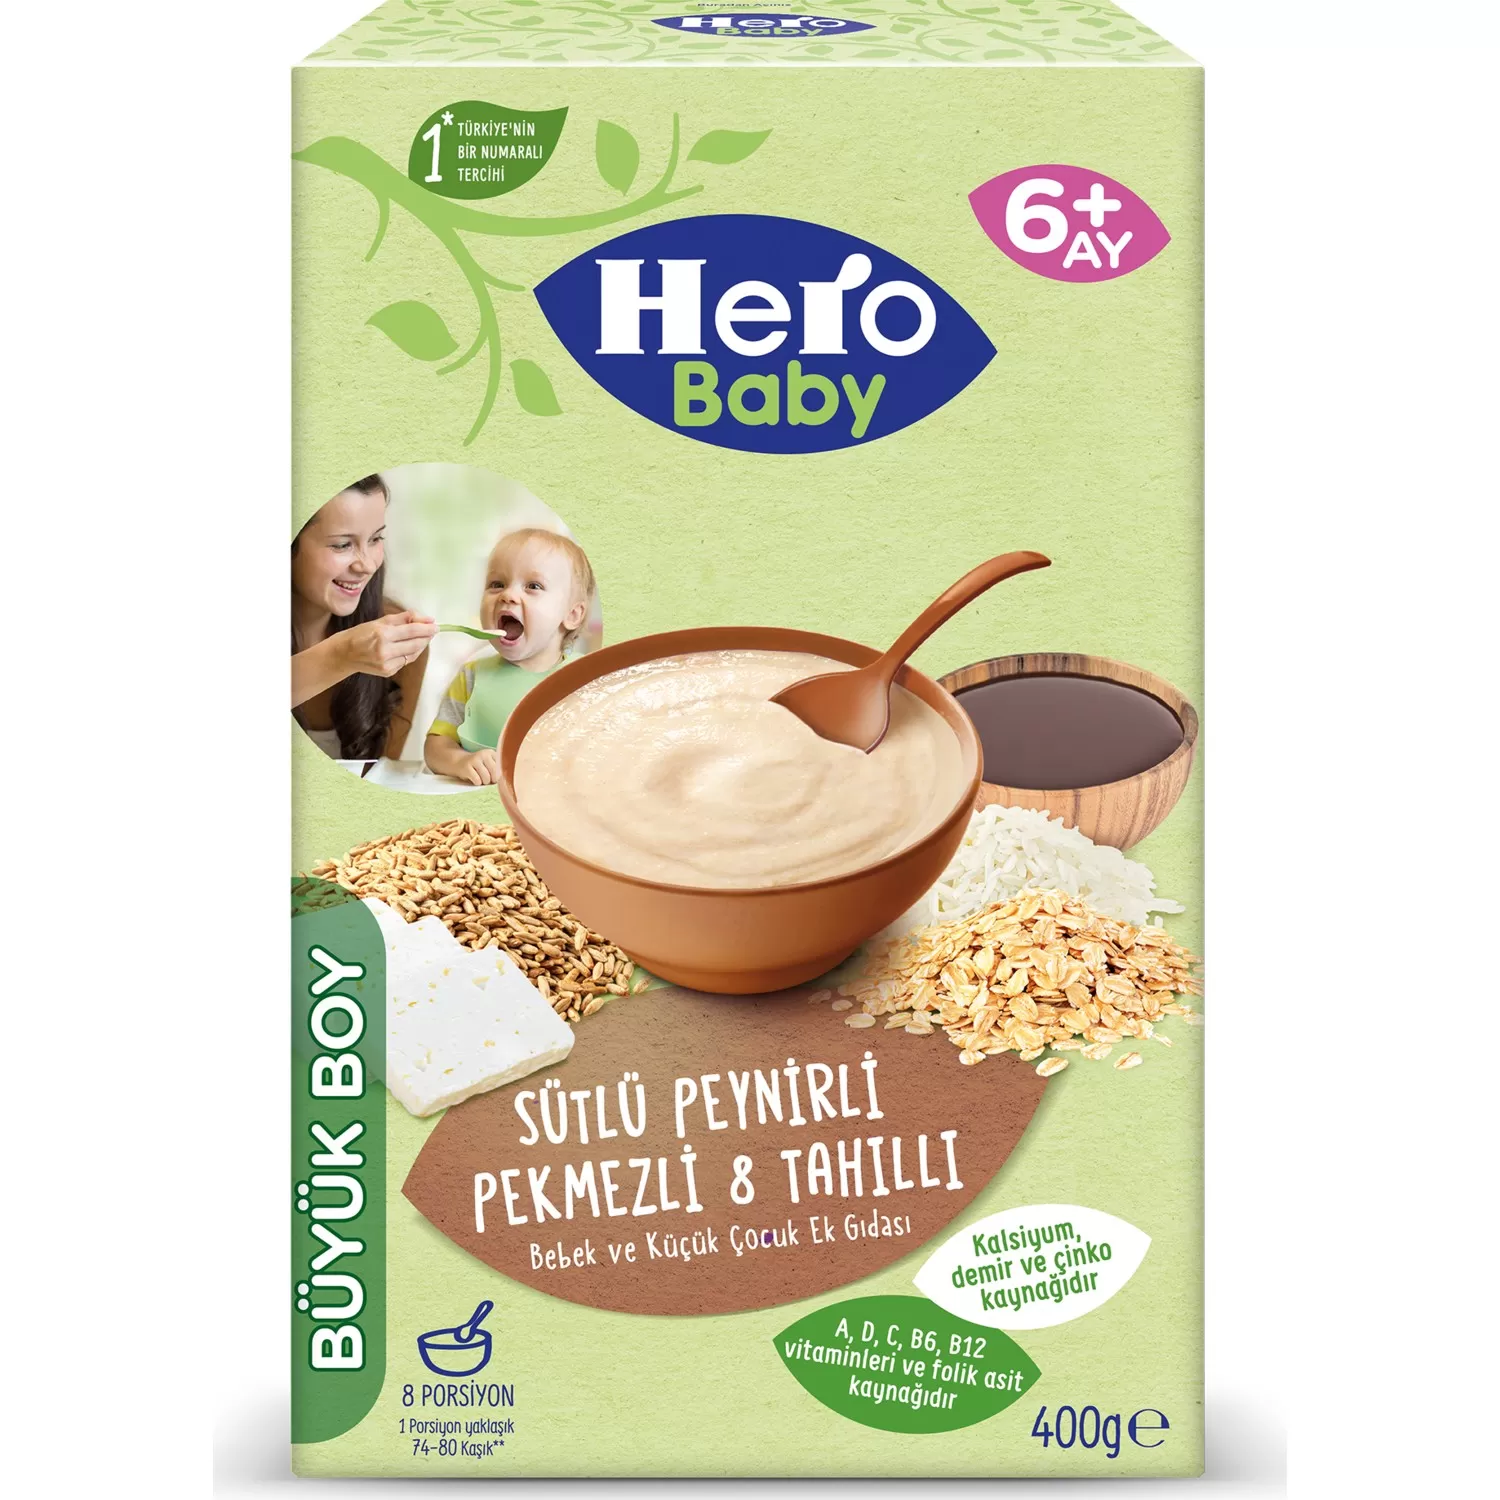 Hero Baby Sütlü Peynirli Pekmezli 8 Tahıllı Kaşık Mama 400 gr 2'li Paket